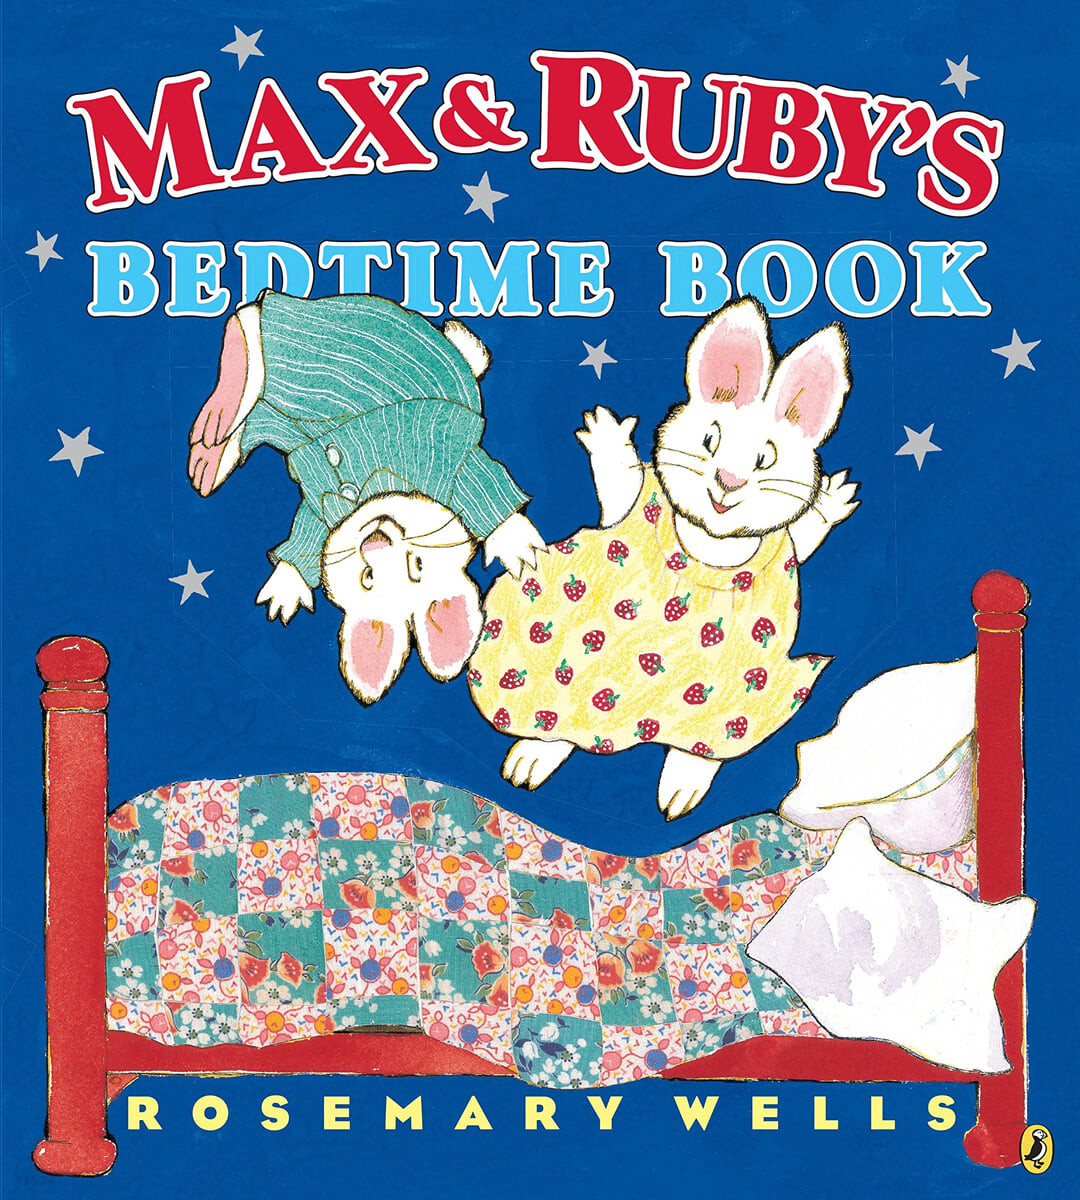 Max & Rubys bedtime book